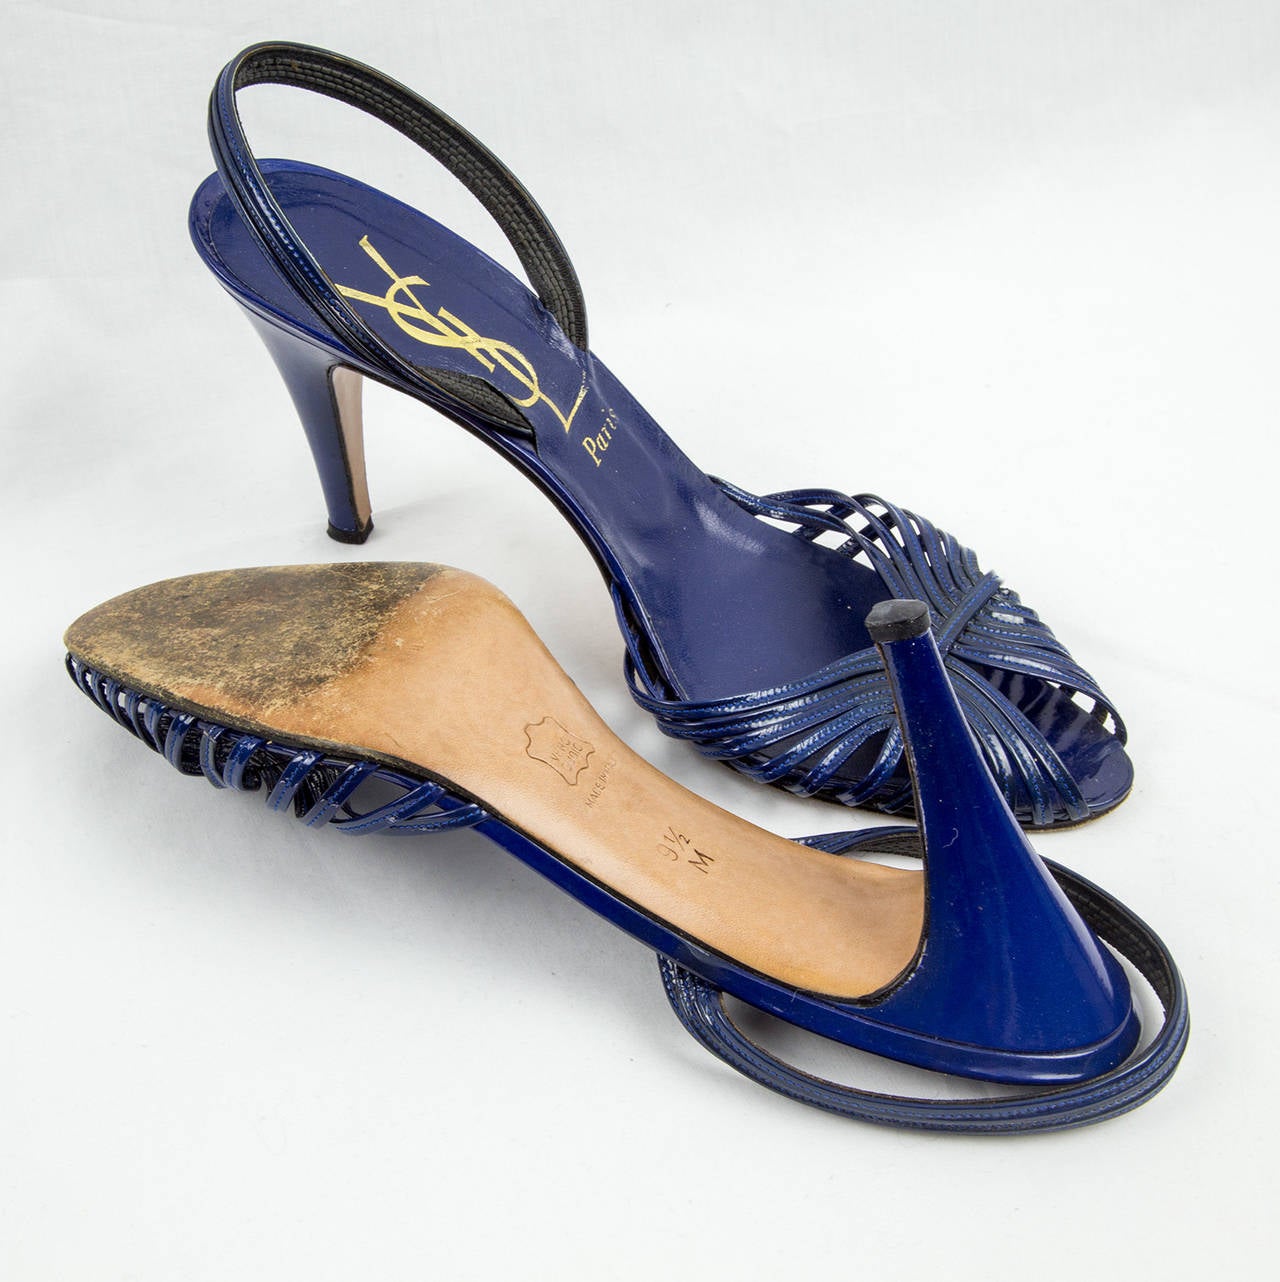 Yves Saint Laurent Paris Sandal-style Shoes in Striking Blue Patent Leather; 4